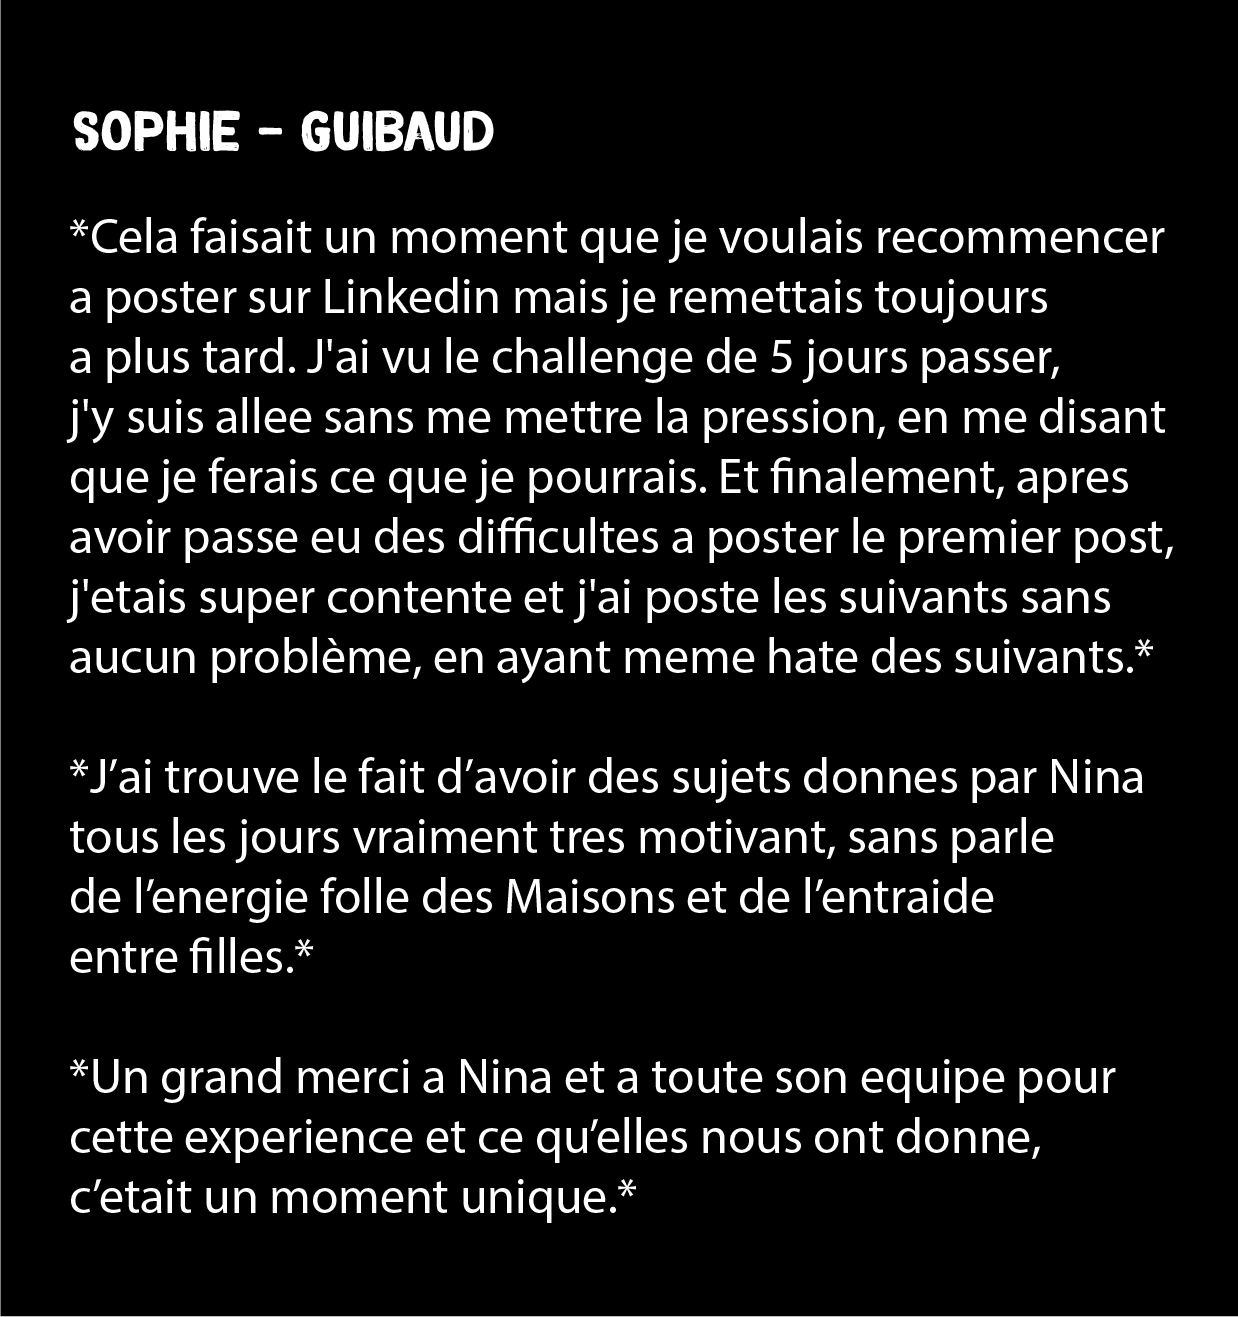 Sophie - Guibaud